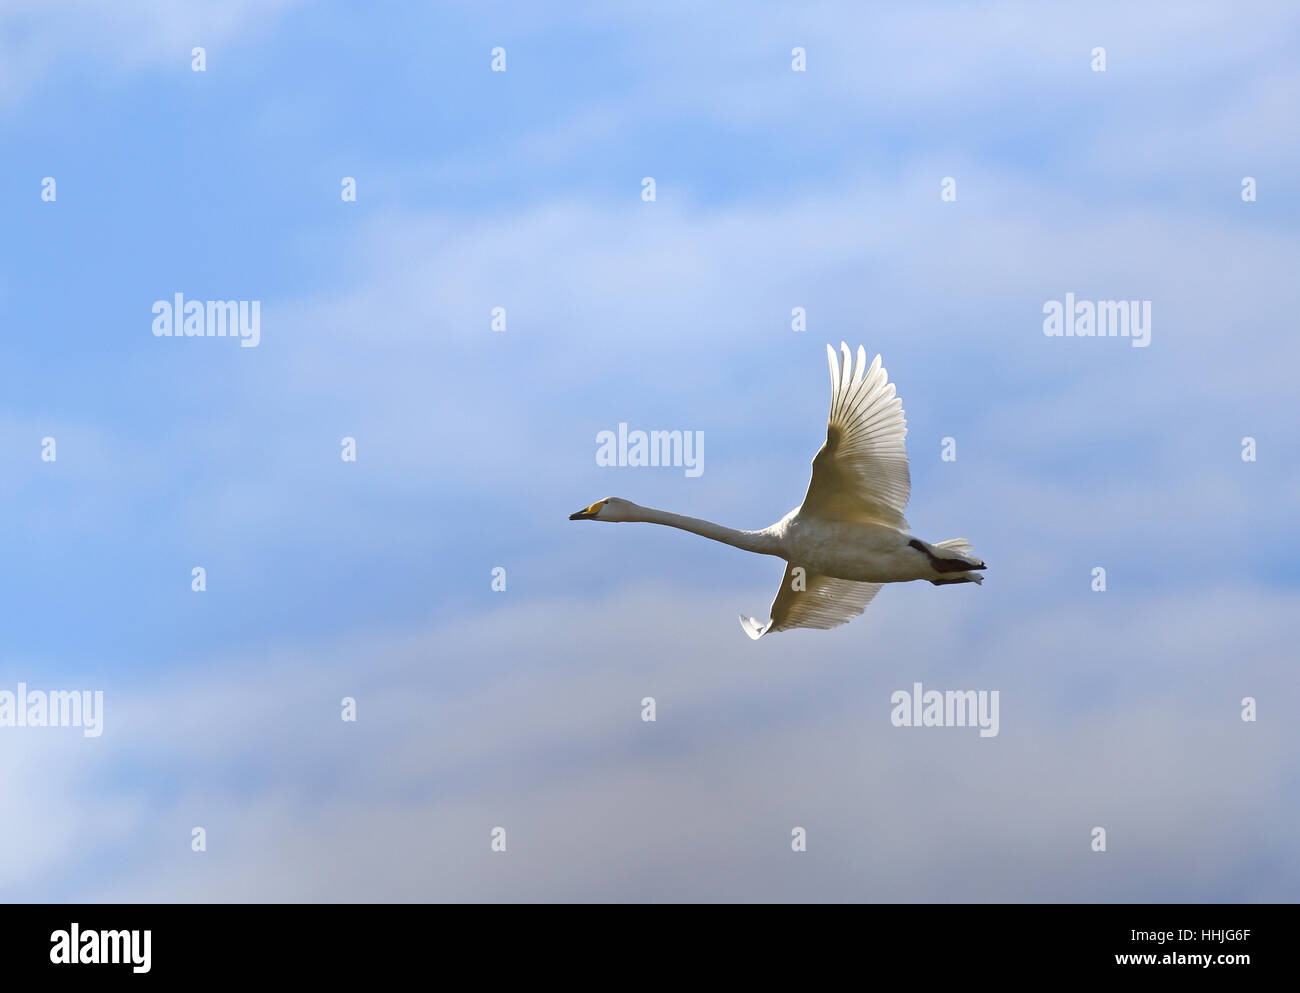 Flying cygne chanteur (Cygnus cygnus) Banque D'Images